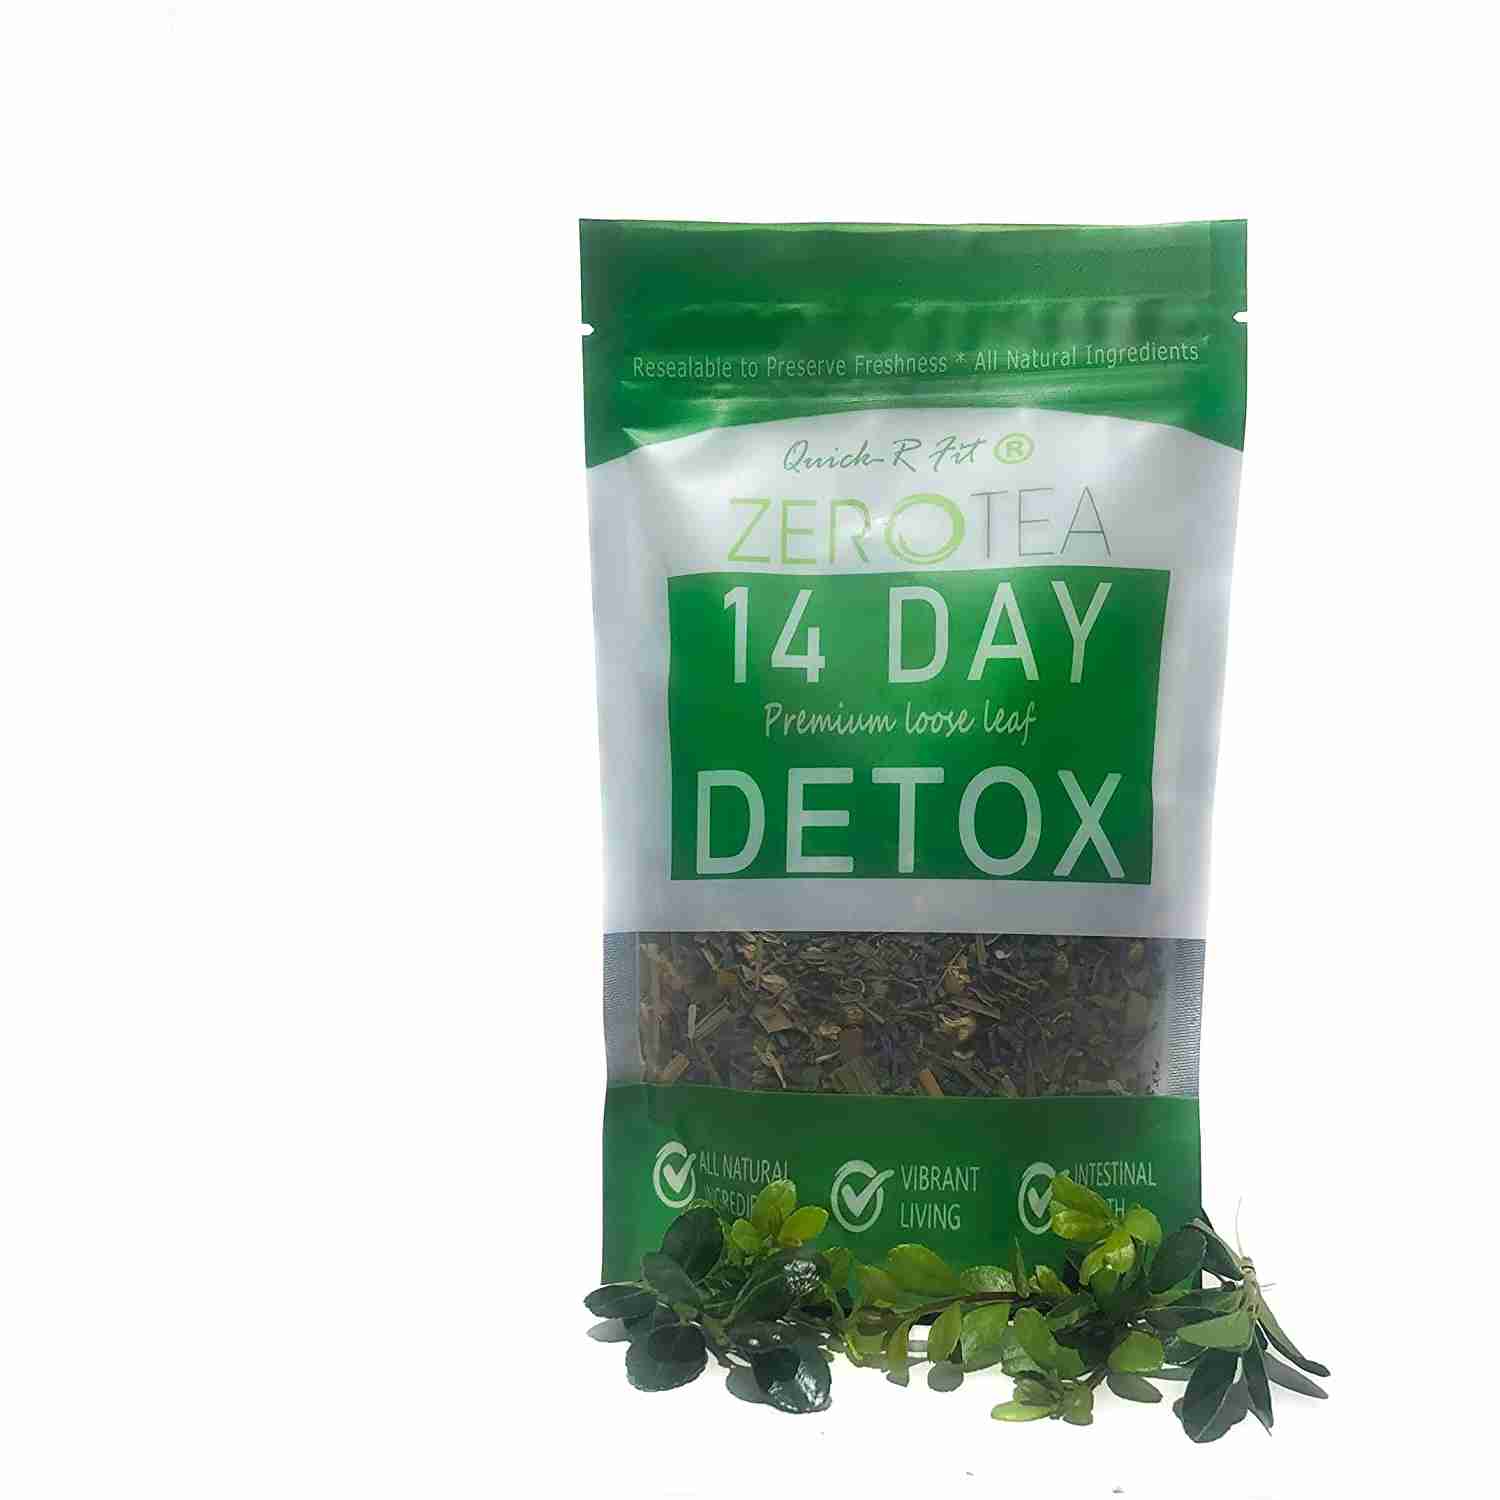 detox-tea-weight-loss-fat-burn-14-day-slimming-flat-tummy with cash back rebate